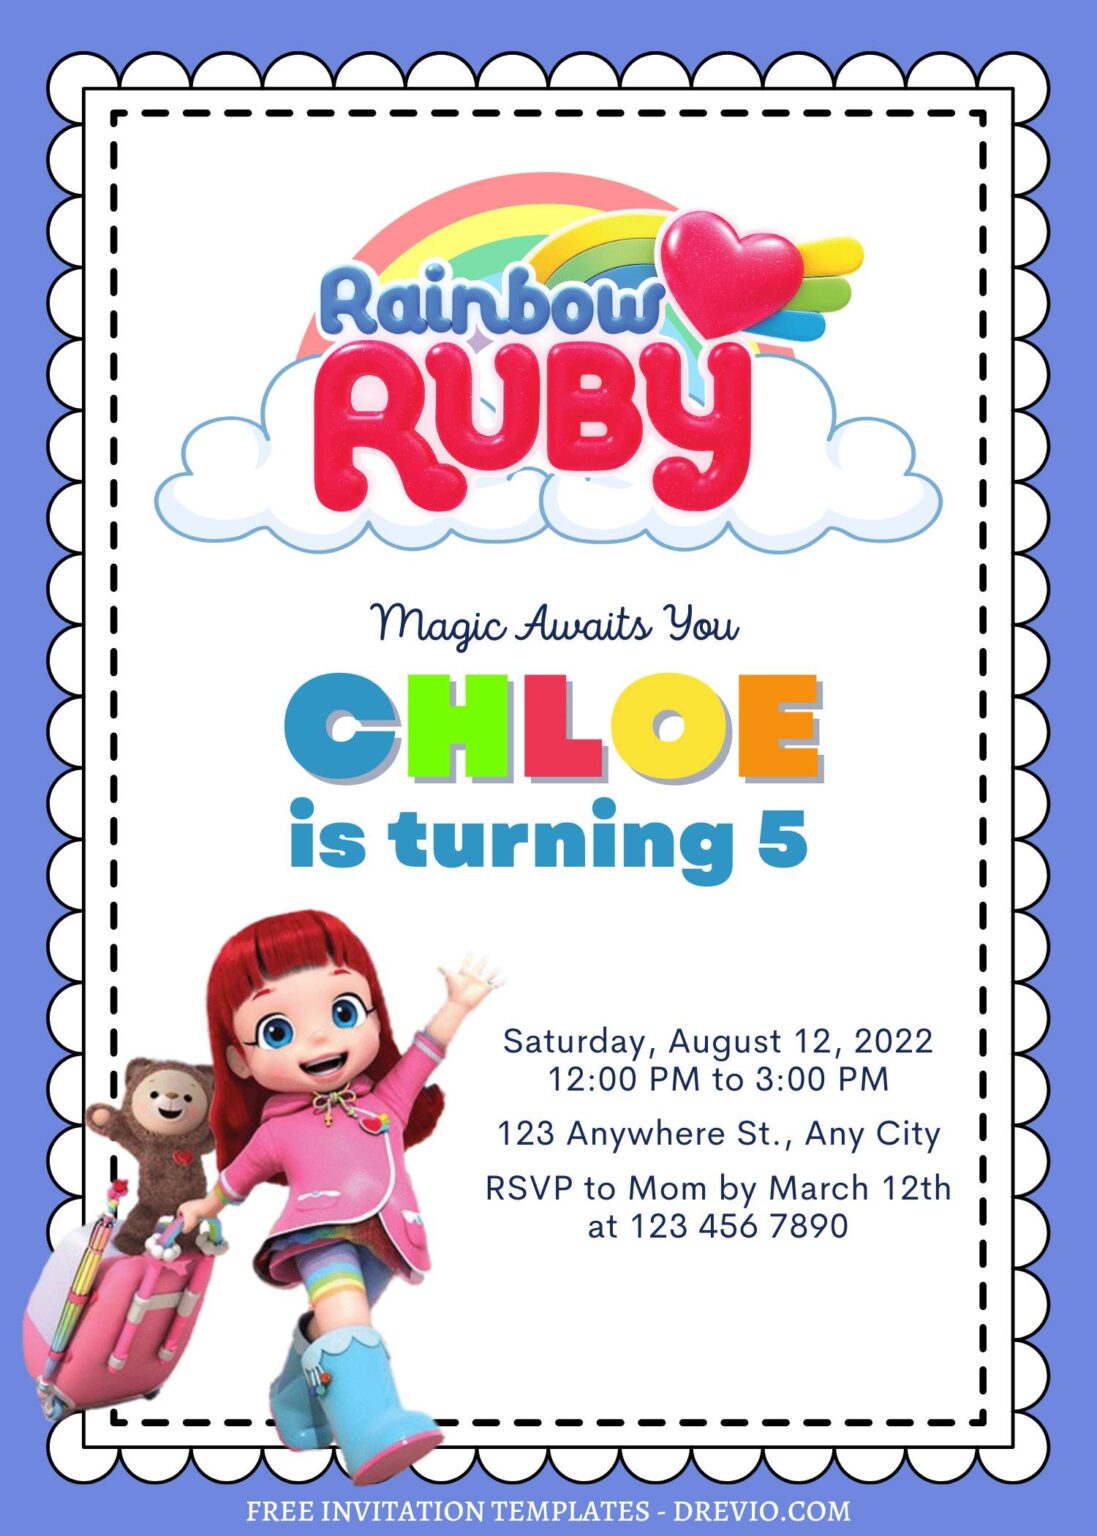 FREE EDTABLE 10 Rainbow Ruby And Roller Canva Birthday Invitation 